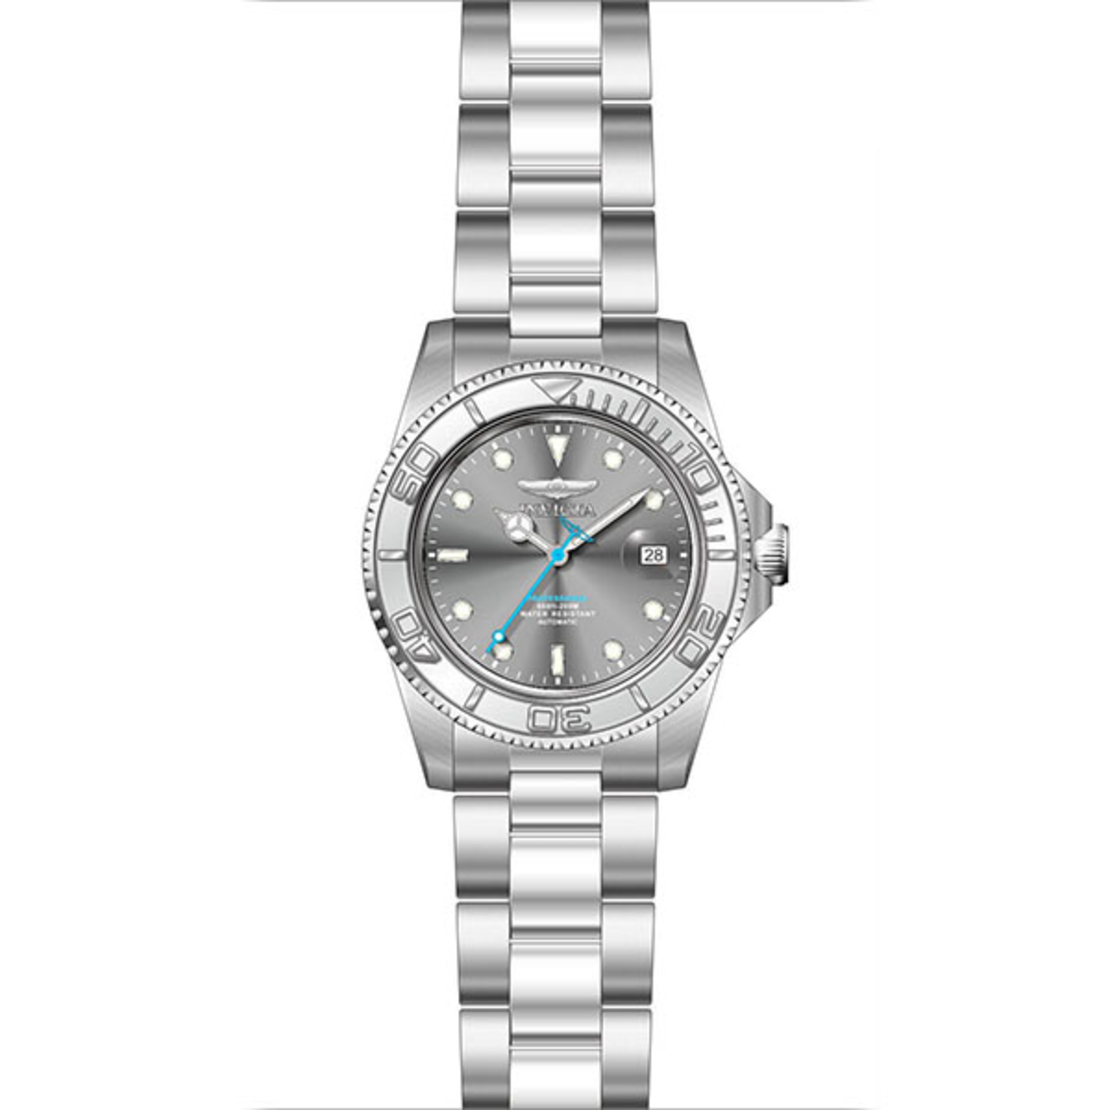 שעון Invicta Pro Diver לגבר דגם 36748